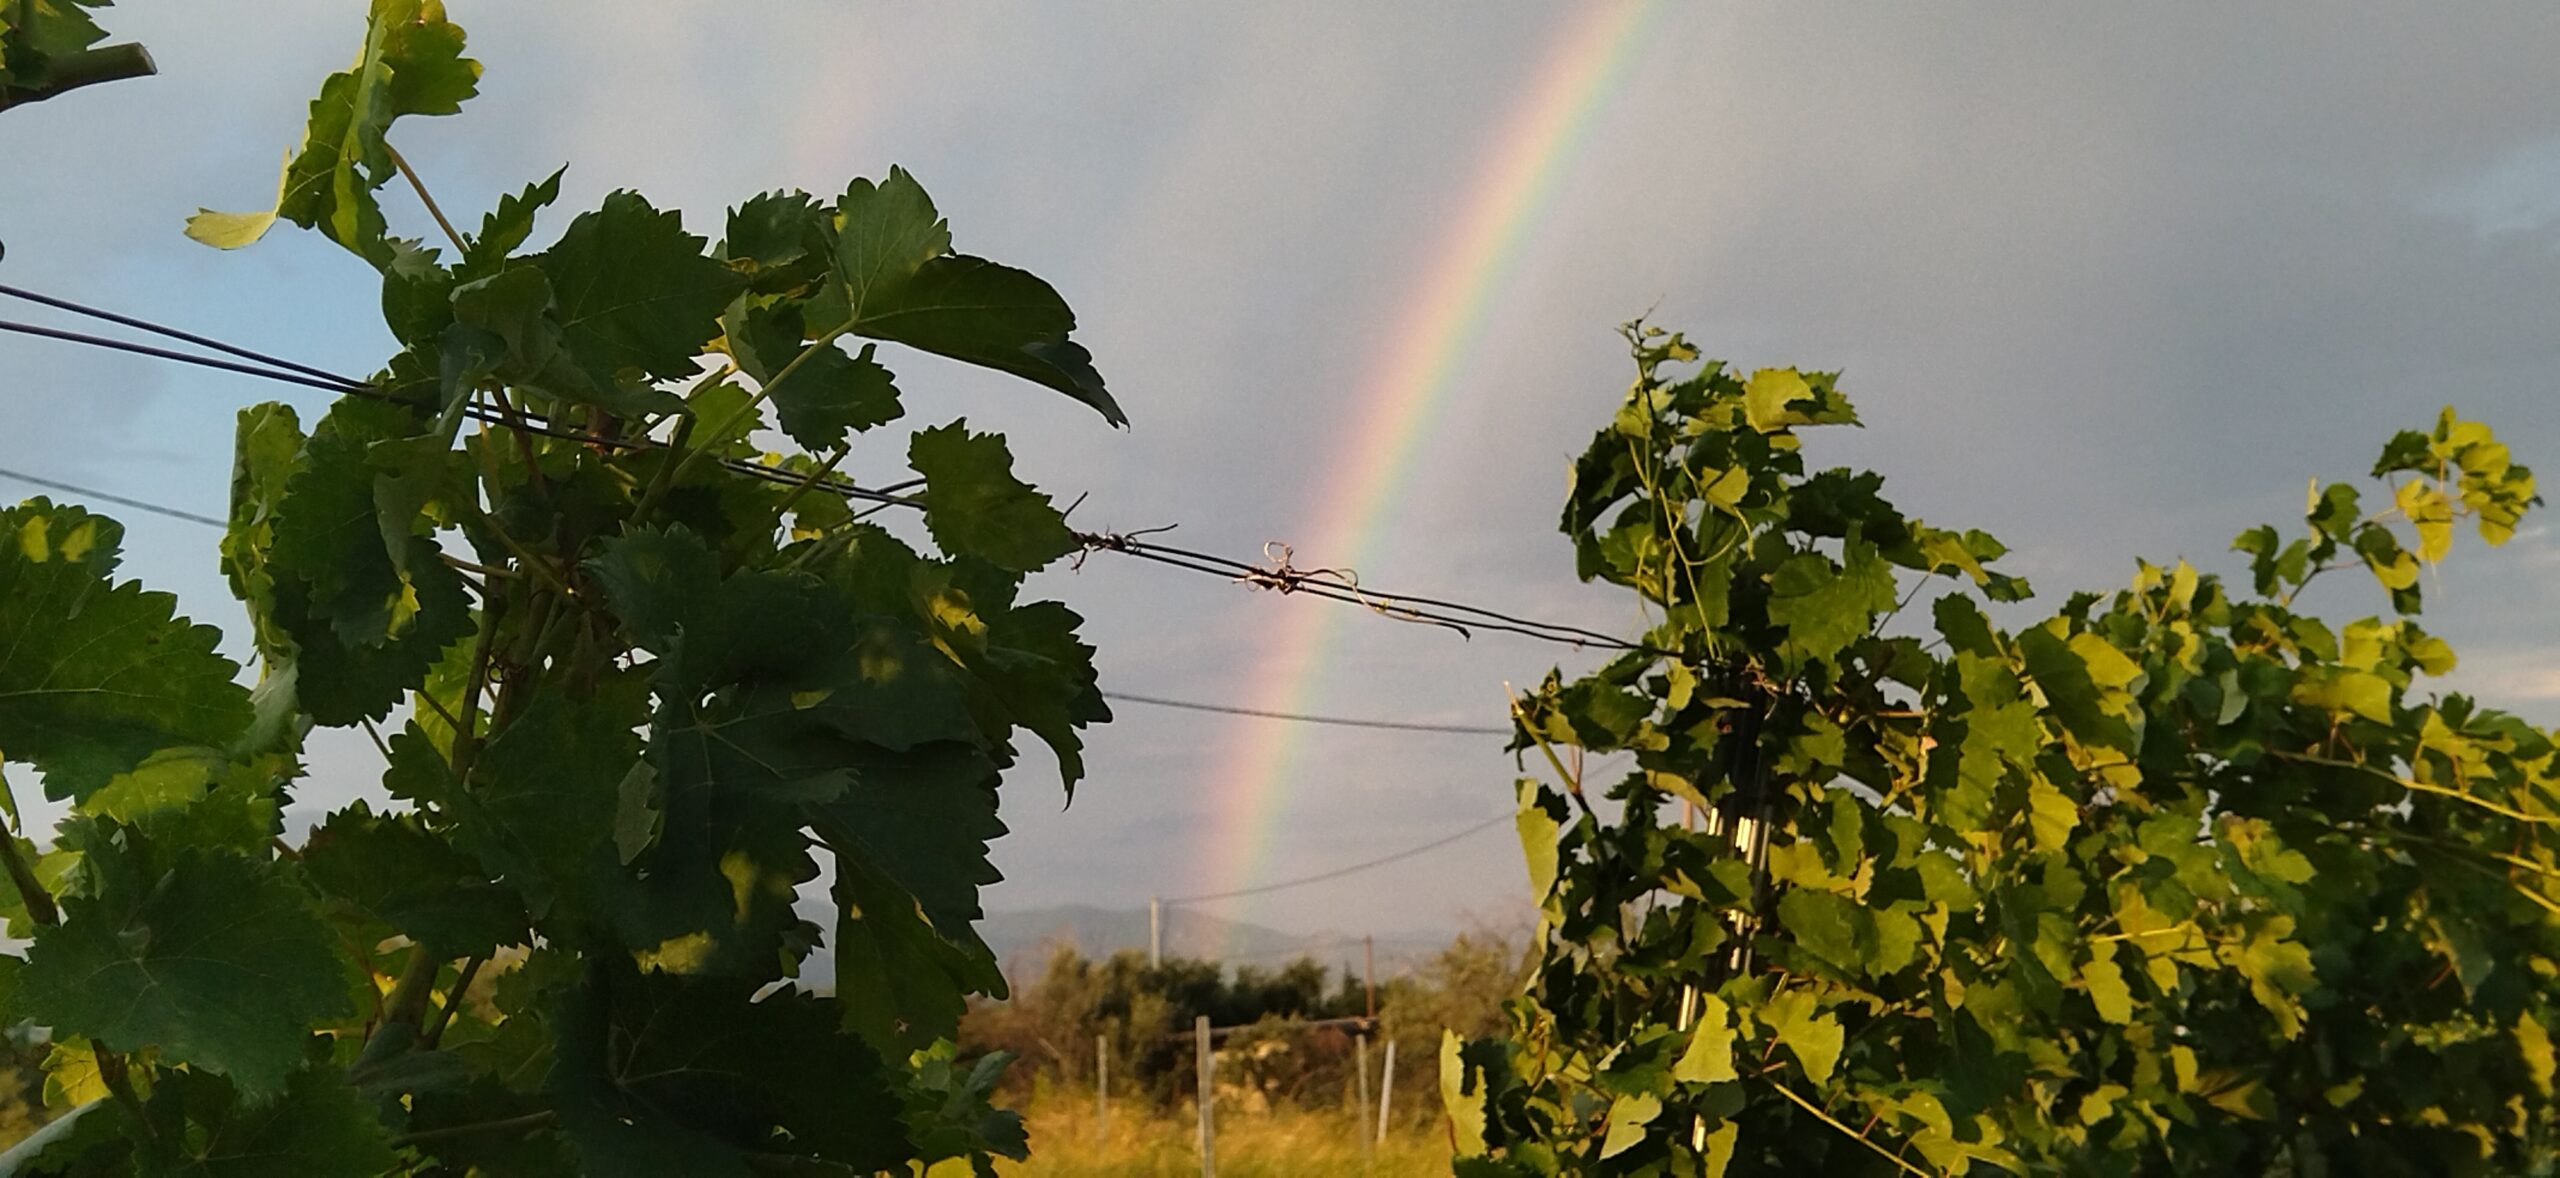 vineyard time - rainbow